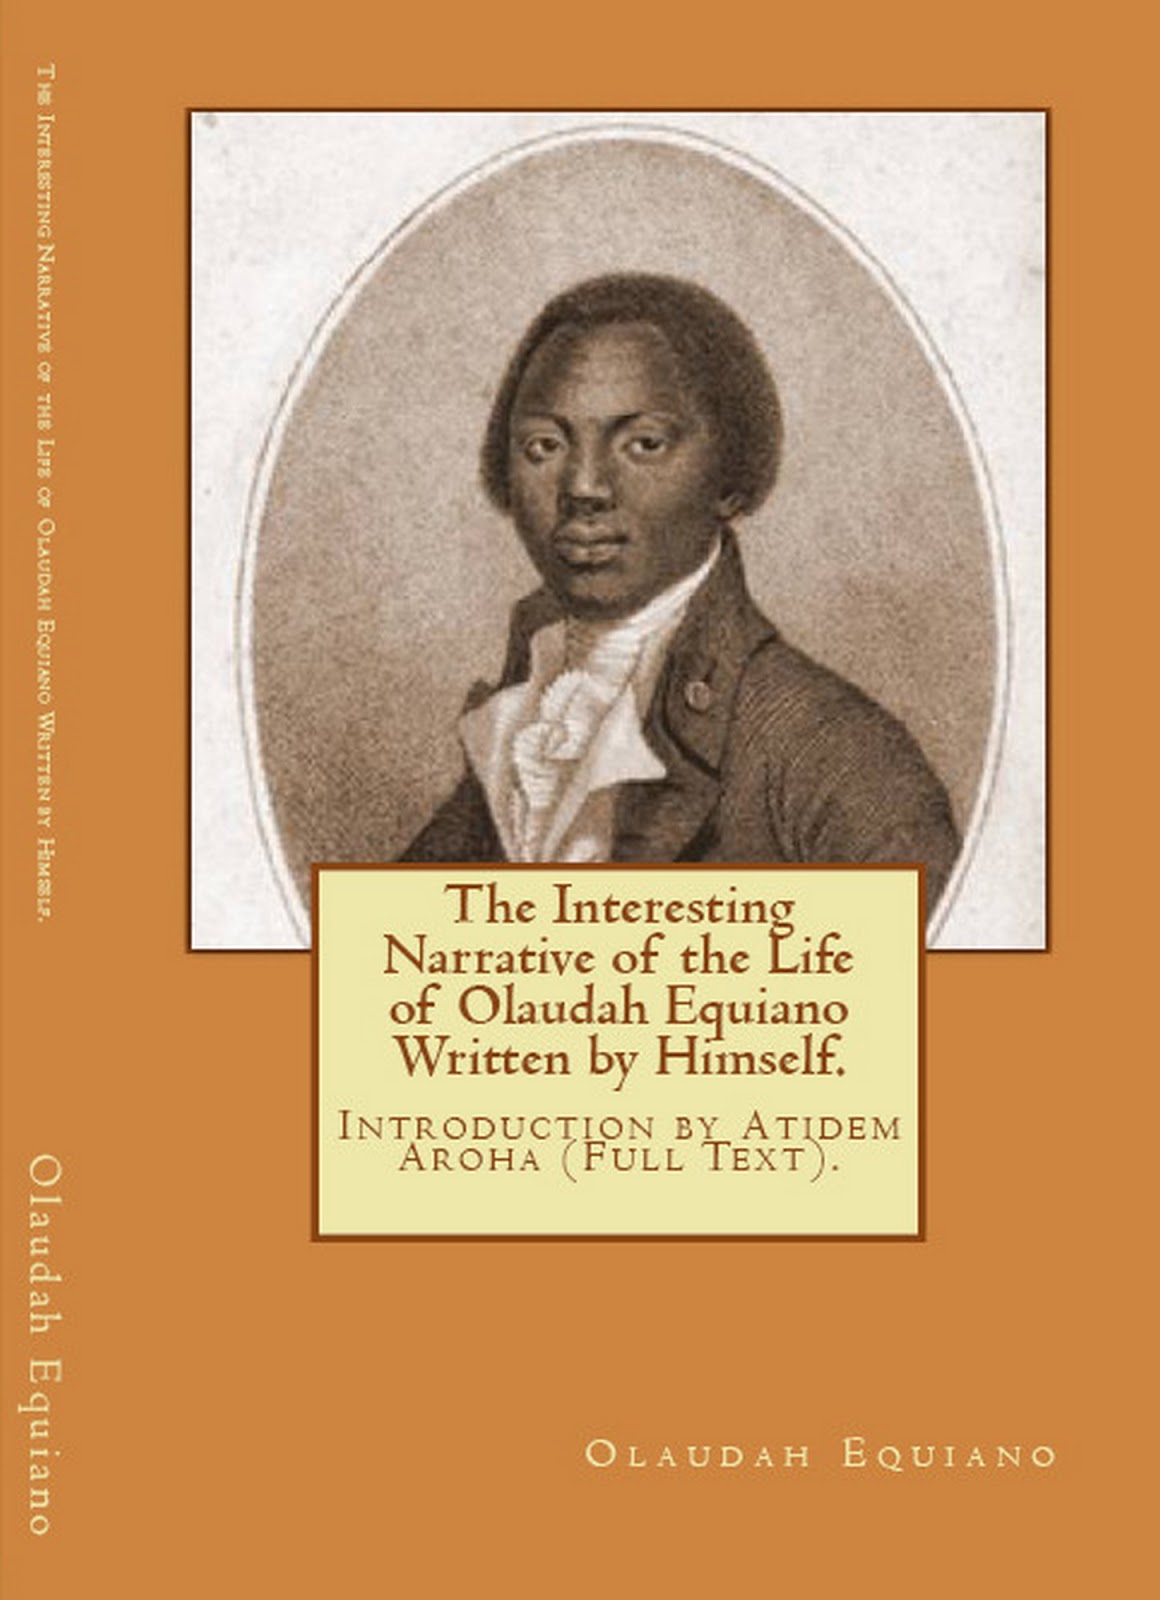 Essay on The Life of Olaudah Equiano